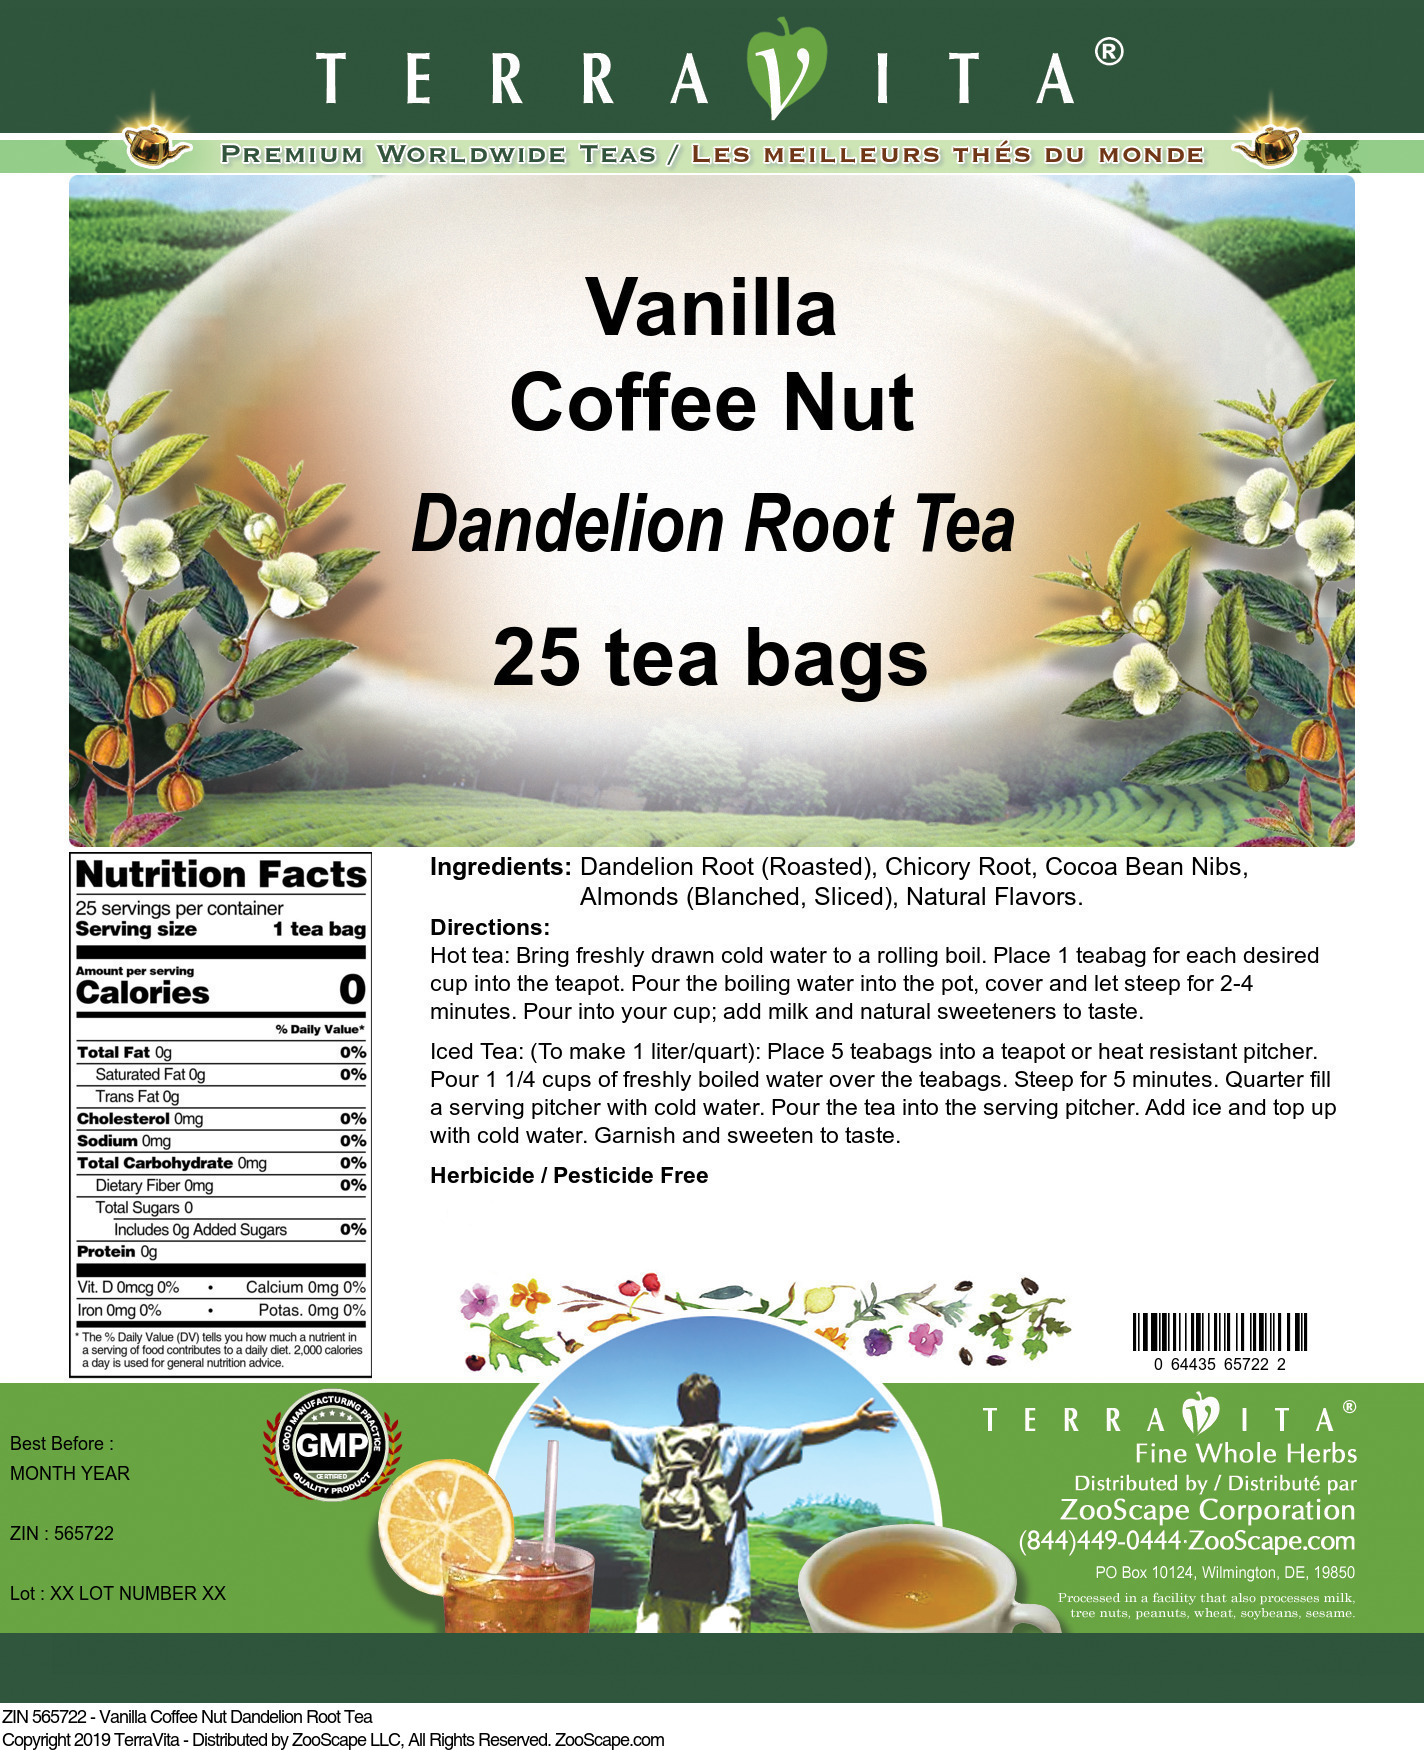 Vanilla Coffee Nut Dandelion Root Tea - Label